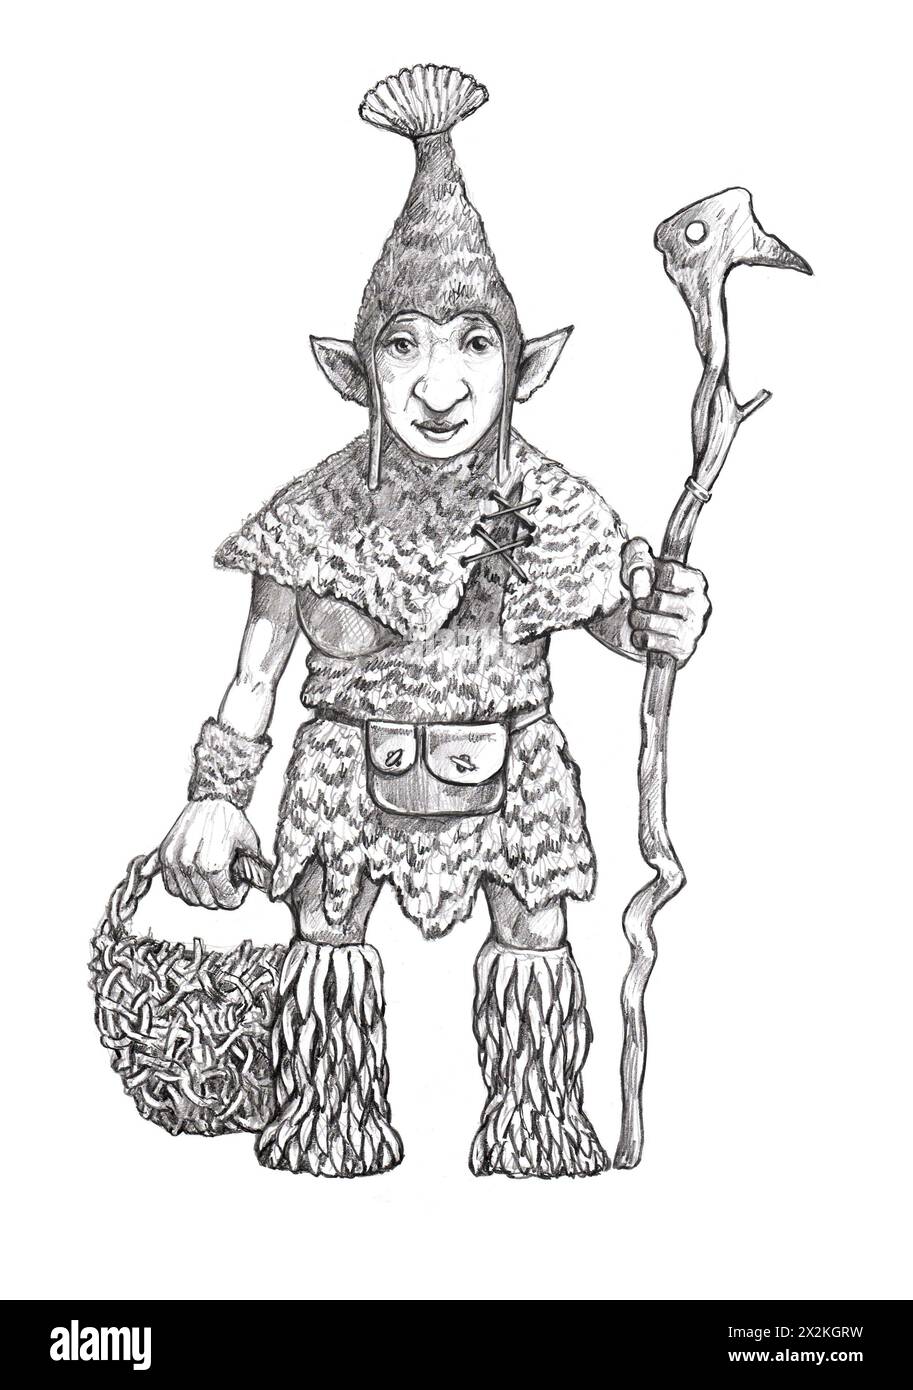 Handmade drawing of a female goblin. Fantasy creature illustration. Stock Photo